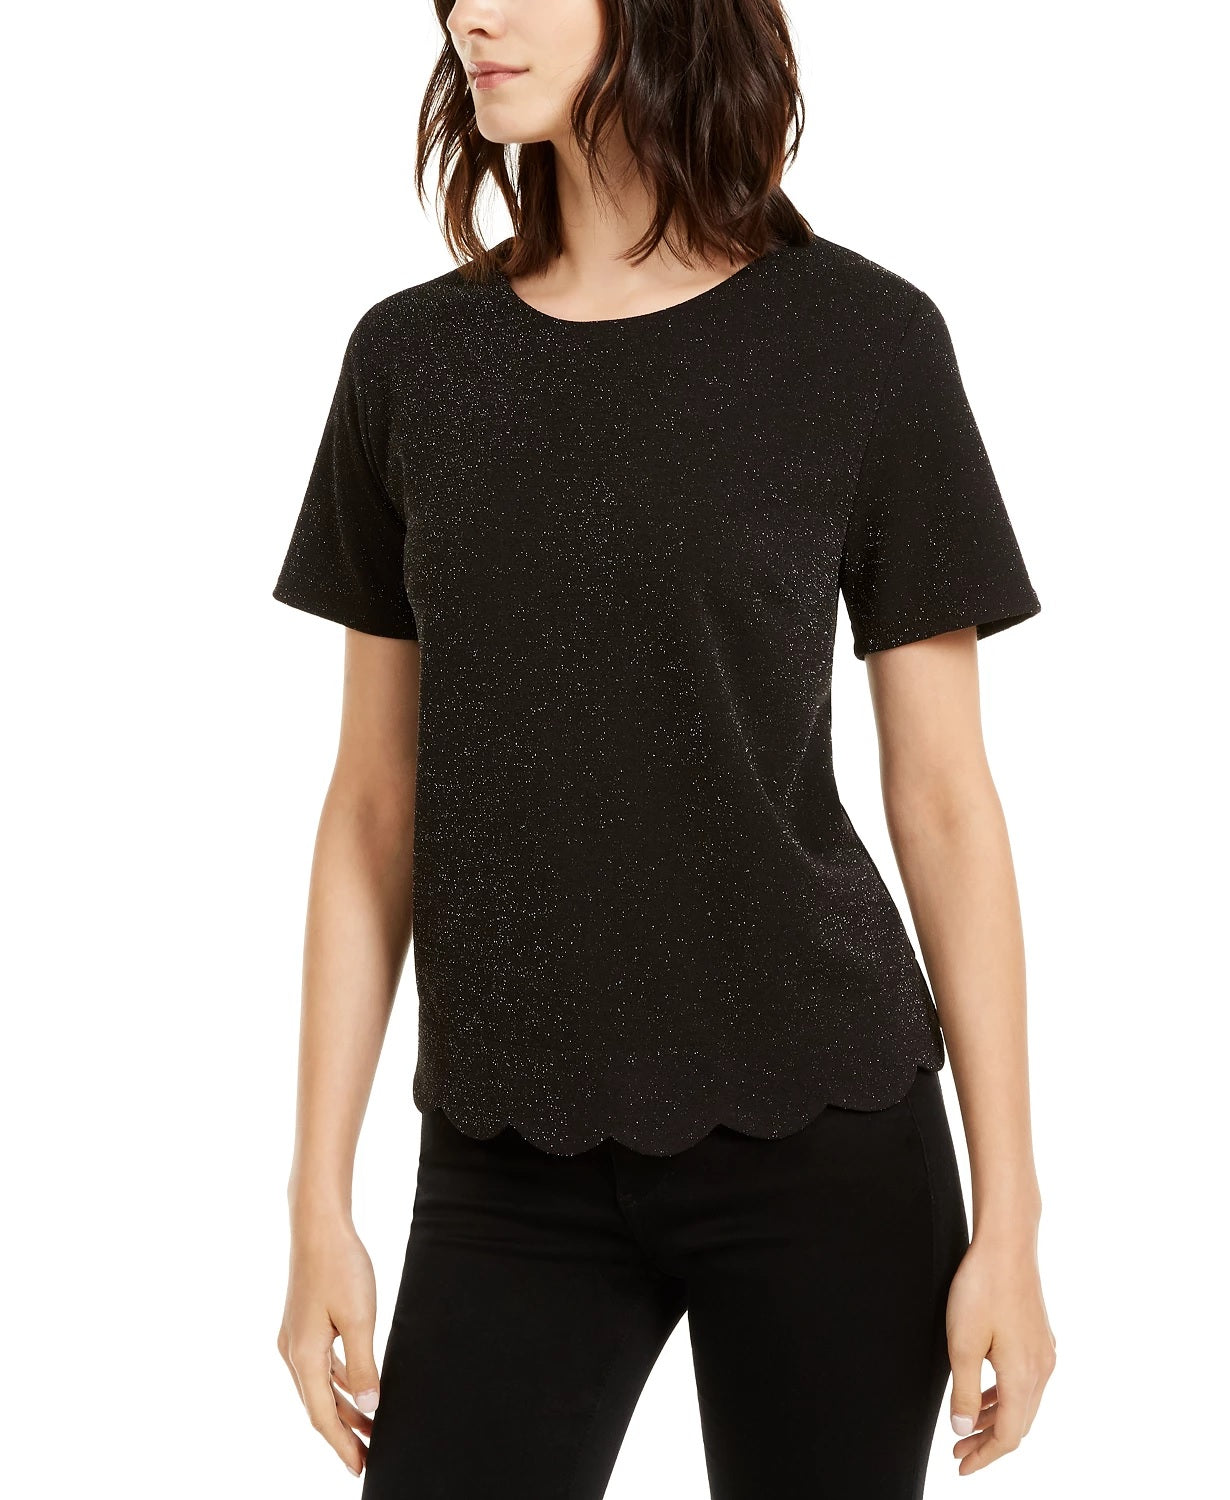 Monteau Women's Embellished Short Sleeve Jewel Neck Top Black Size